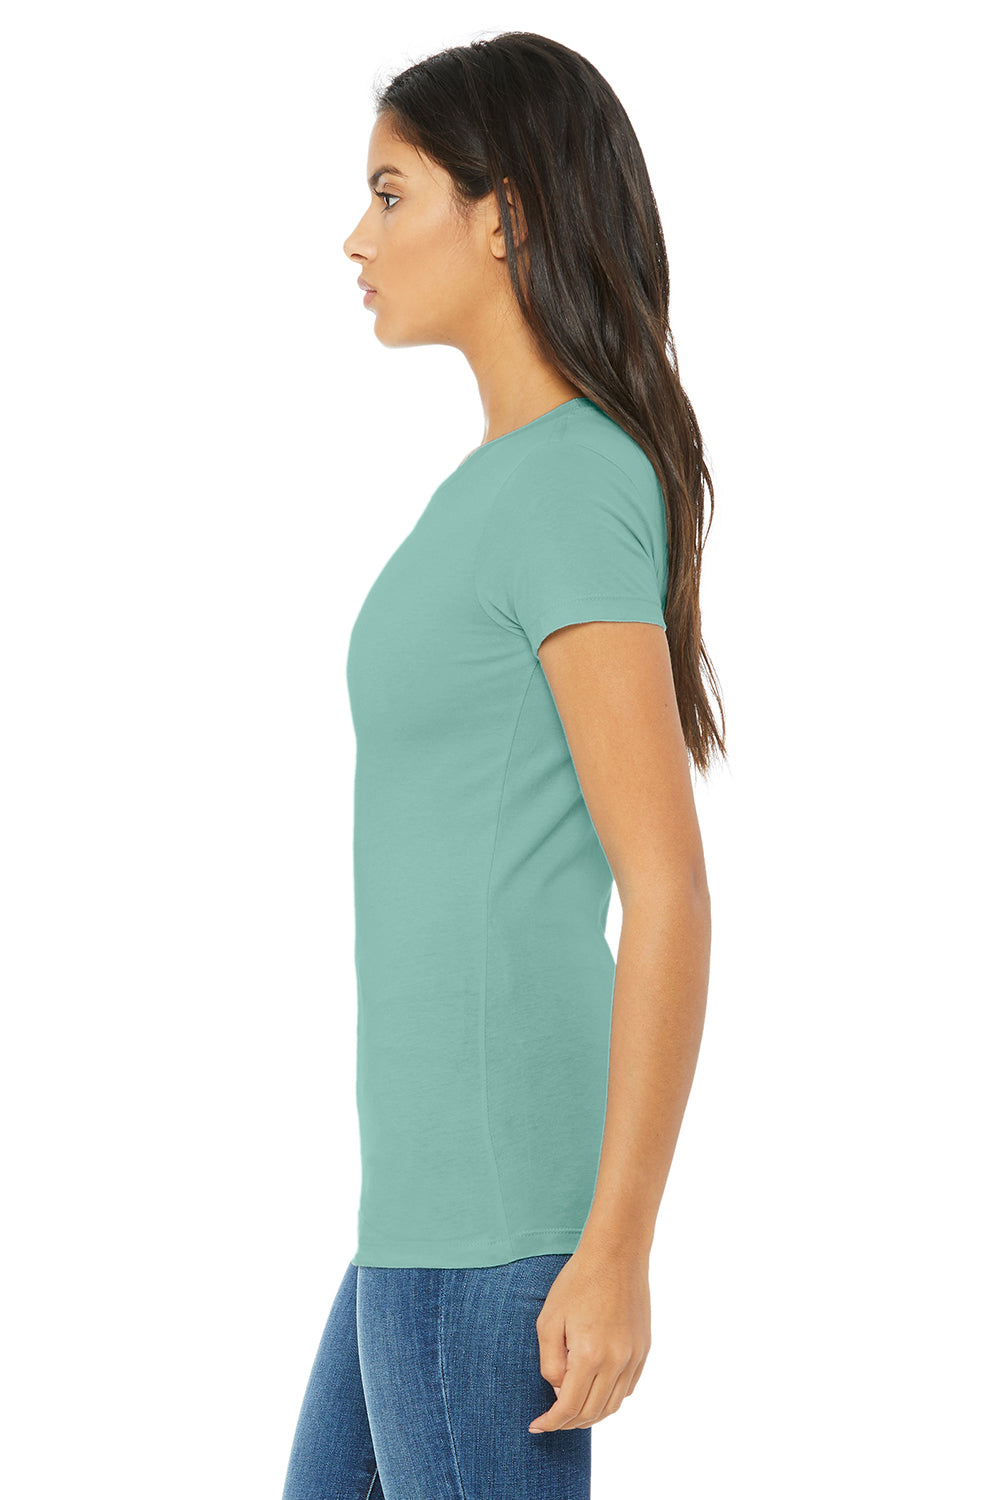 Bella + Canvas 6004 Womens The Favorite Short Sleeve Crewneck T-Shirt Seafoam Blue Side